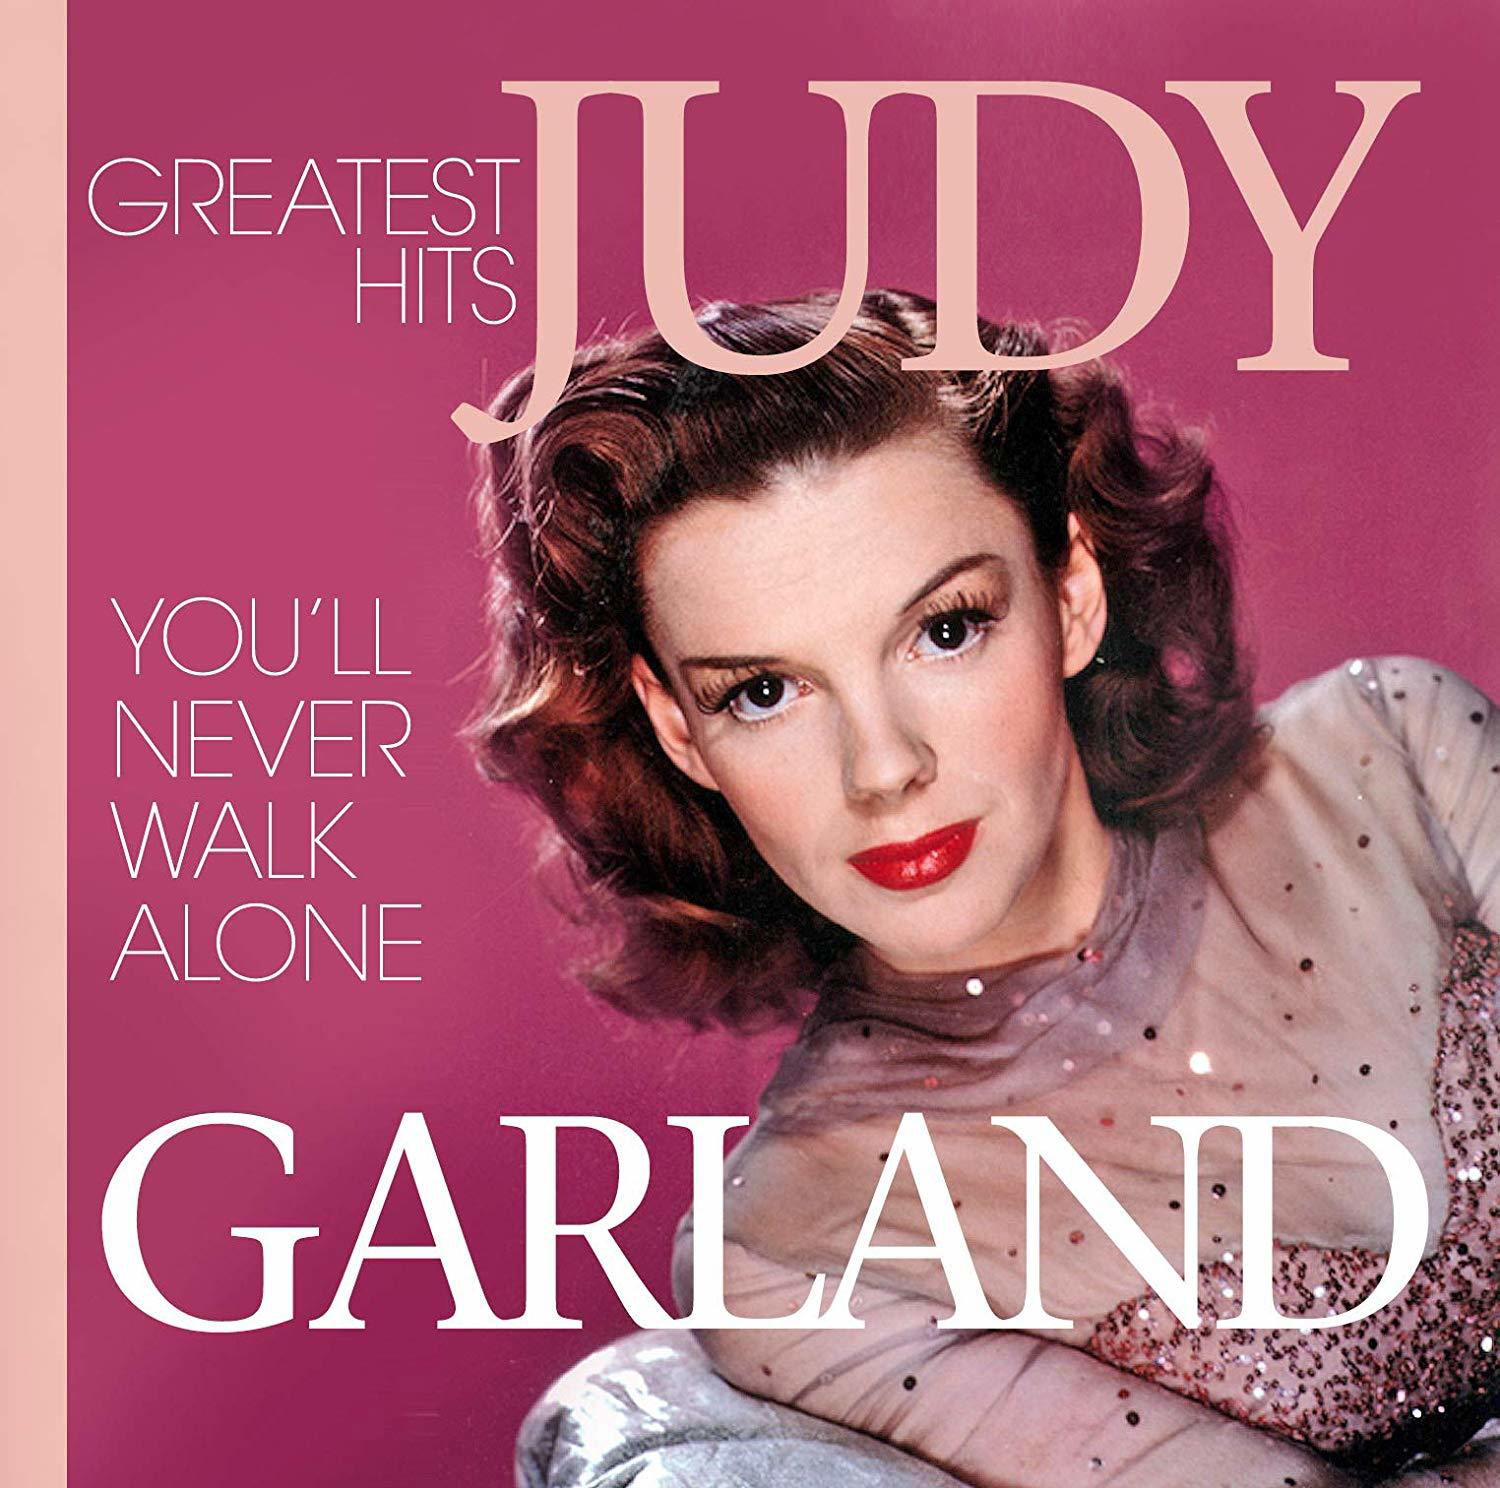 Never Judy You Alone-Greatest - Walk Garland (CD) Hits -